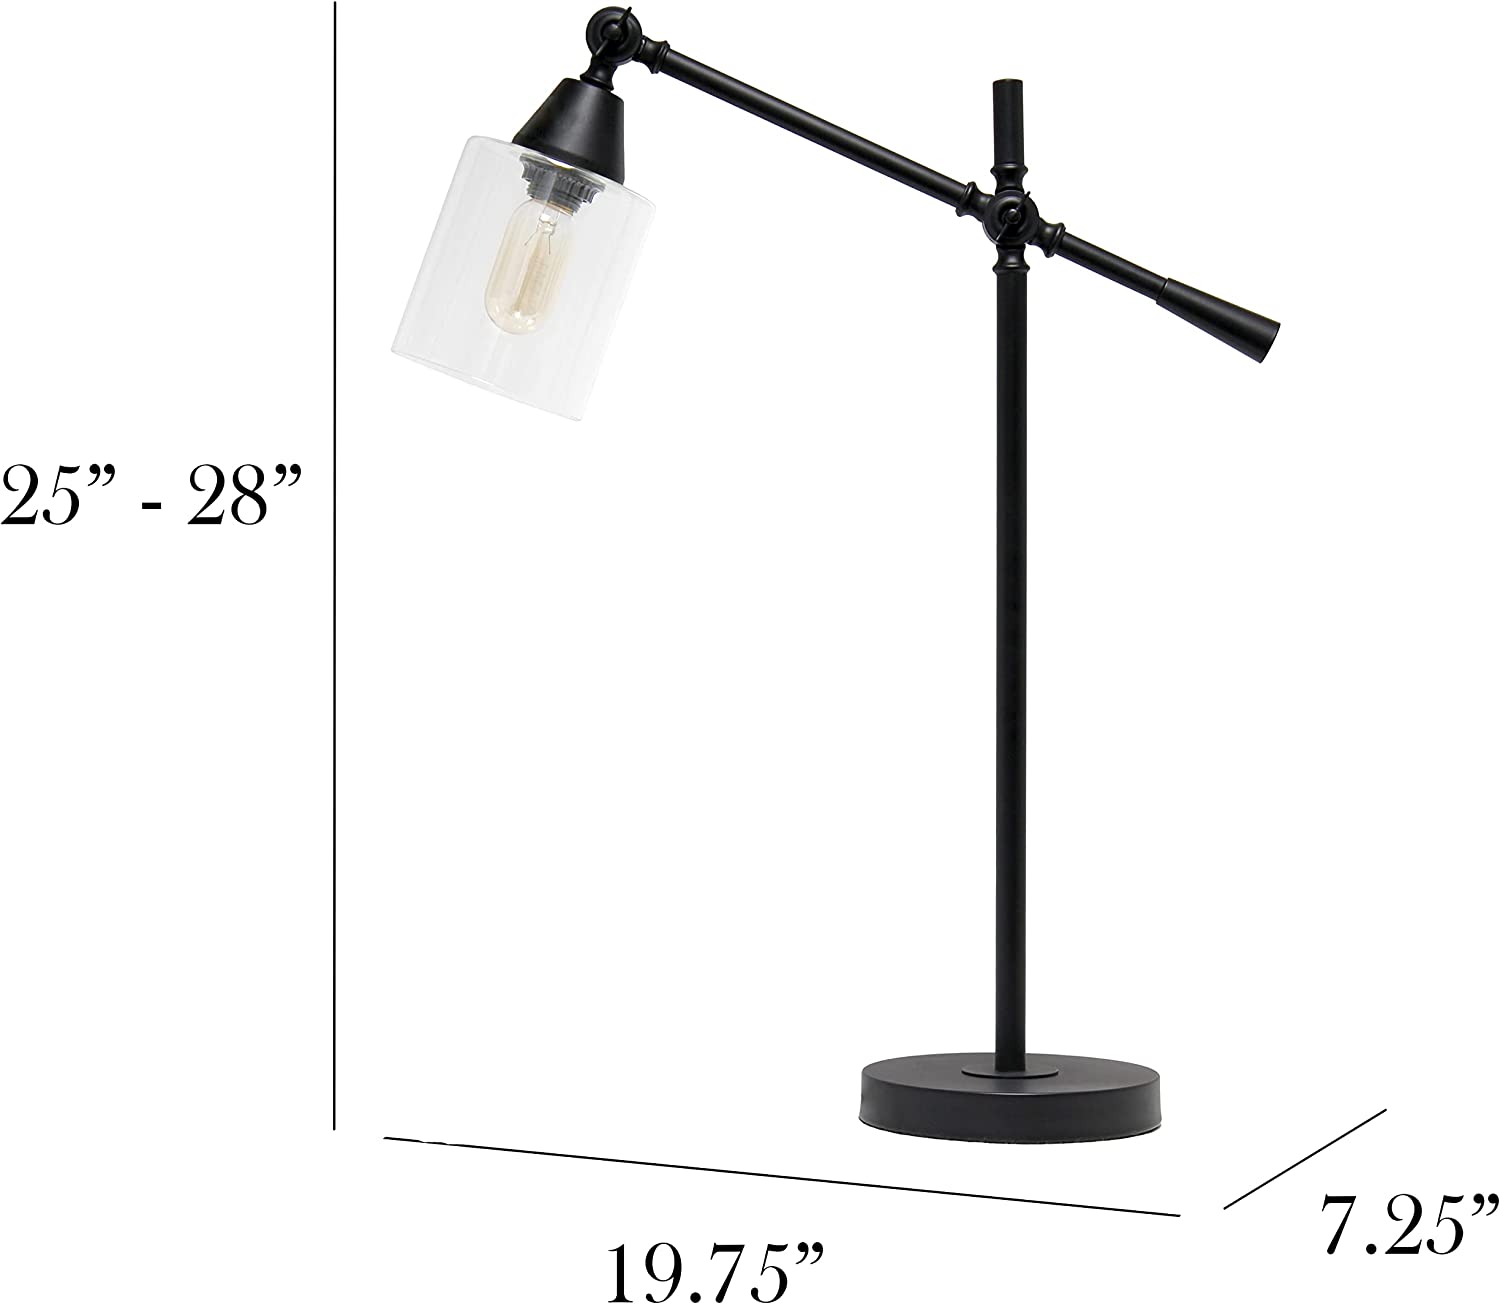 Elegant Designs Tilting Arm Desk Lamp, Black